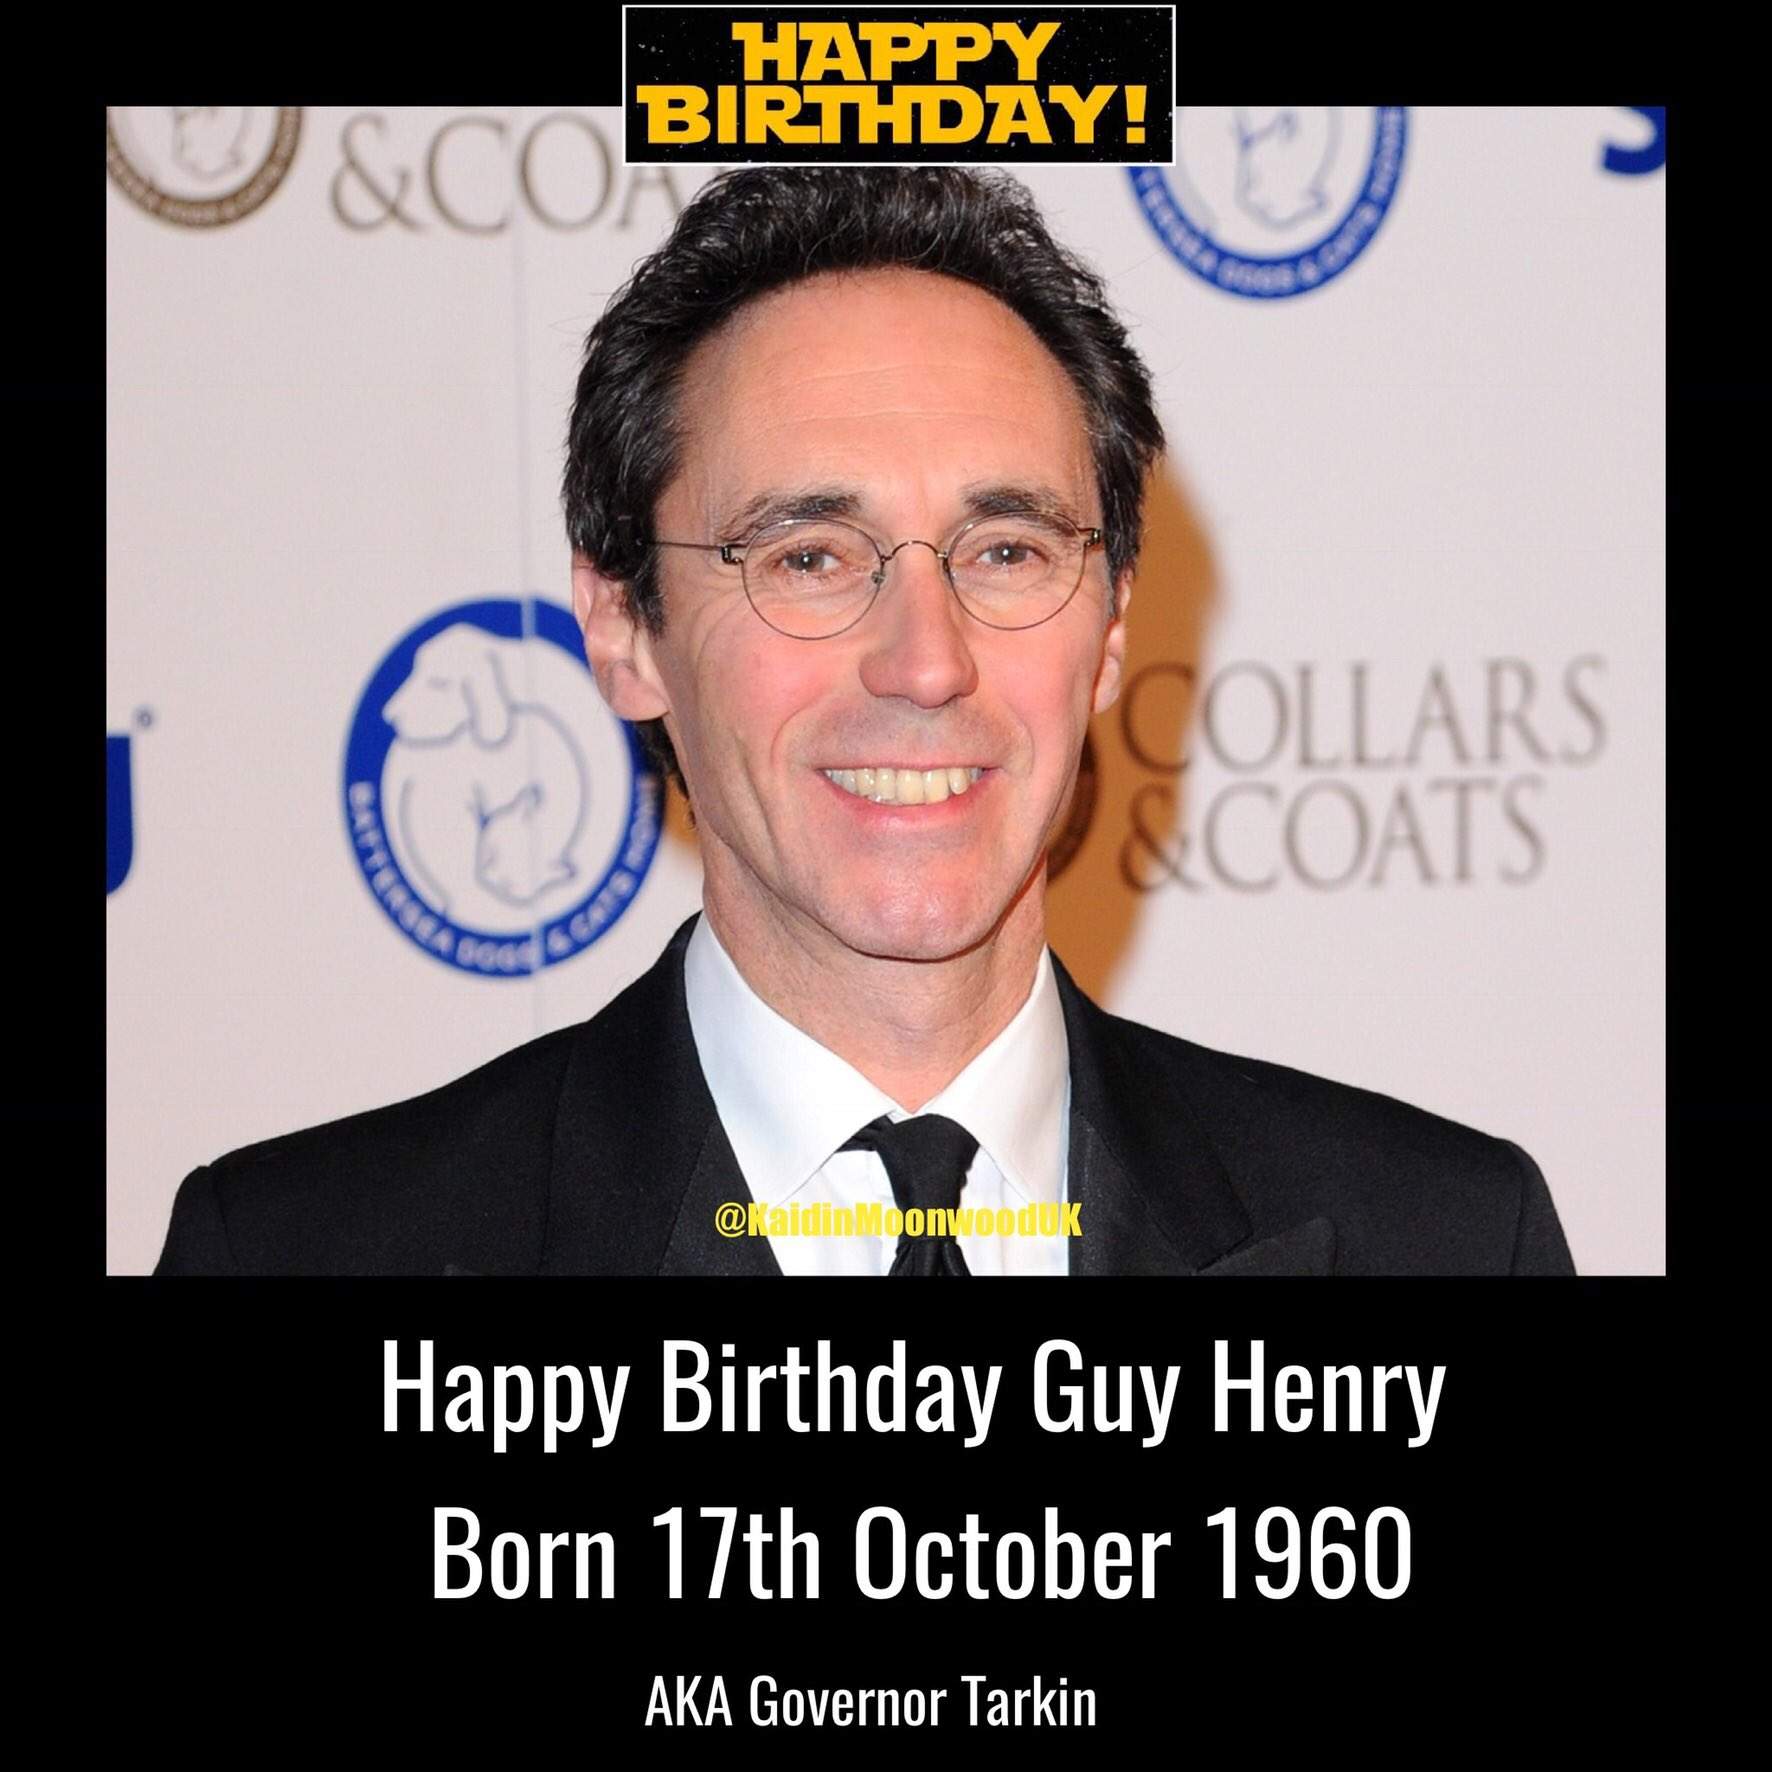 Happy Birthday Guy Henry aka Tarkin in Rogue One. Born 17th October 1960.   